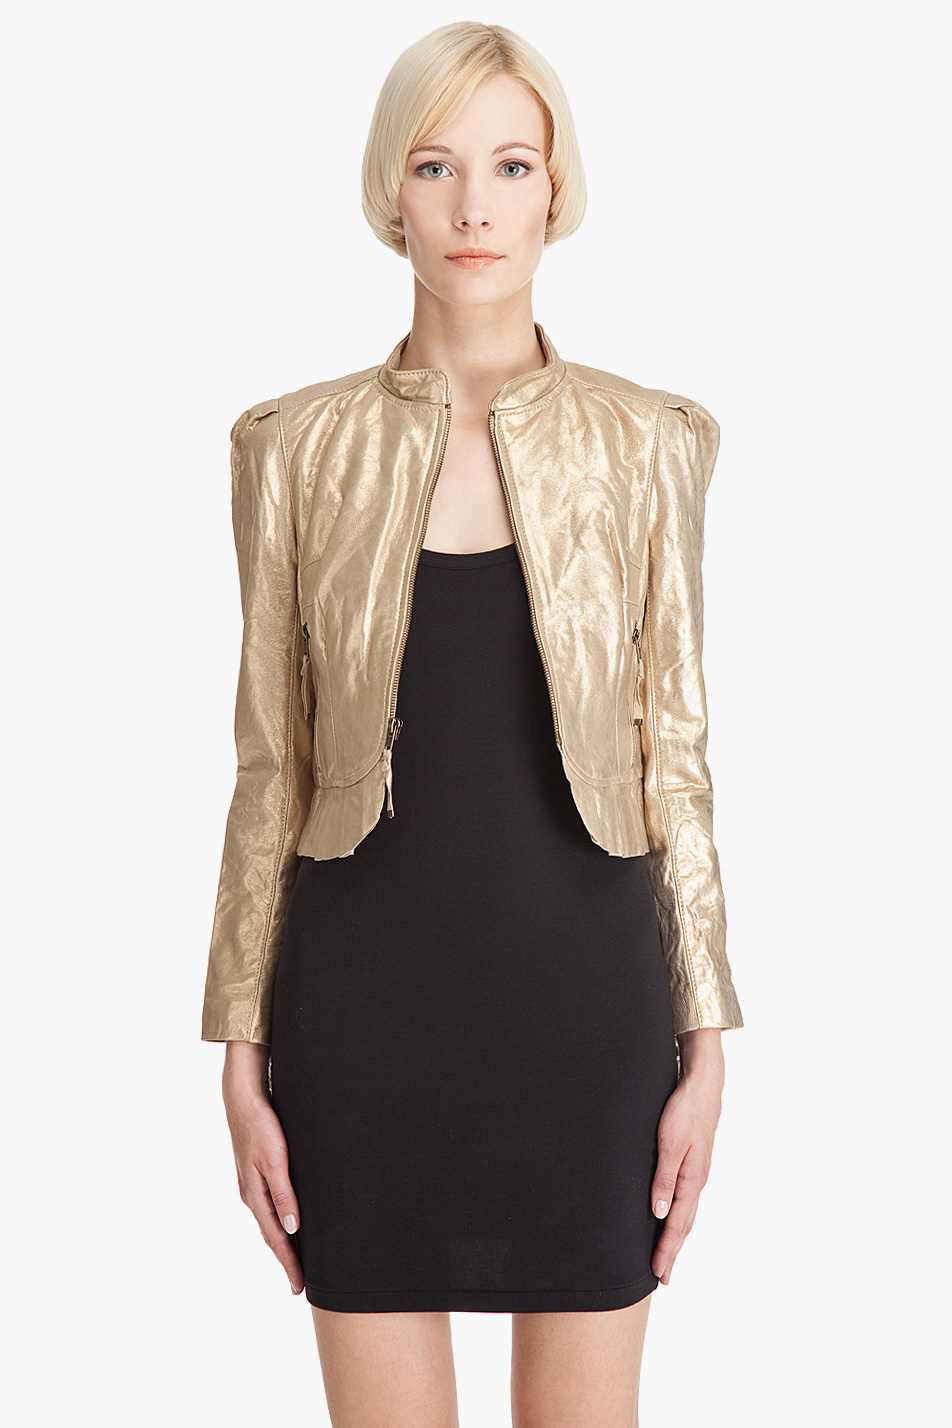 Lyst - Juicy Couture Metallic Leather Jacket in Metallic